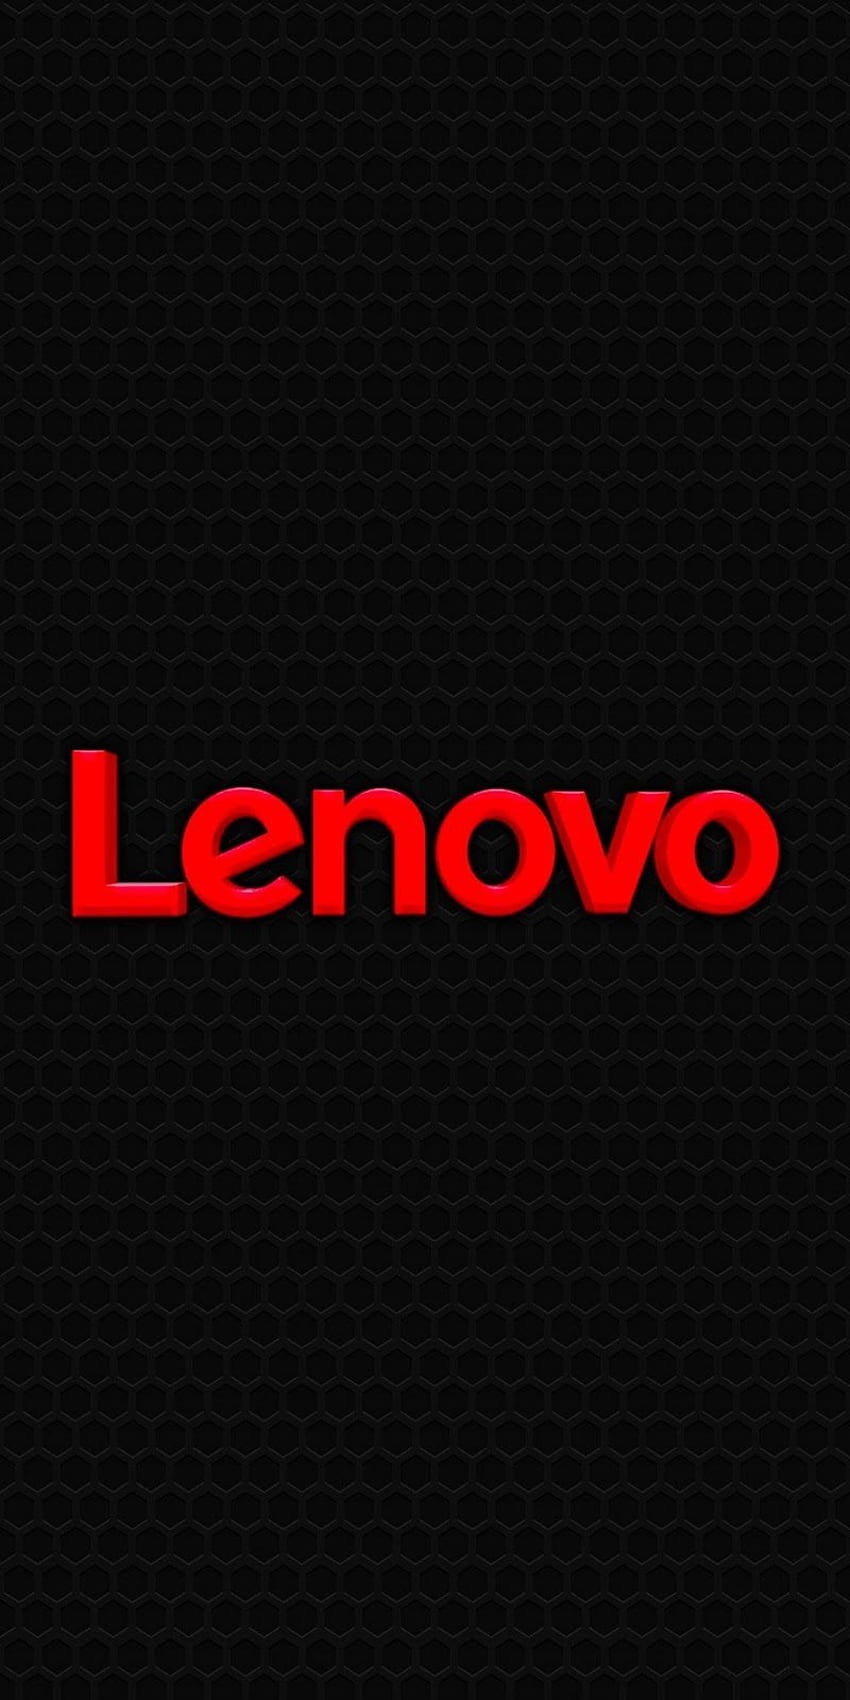 1920x1080px, 1080P Free download | [] Mobile Brand 2019 in 2020. Lenovo ...